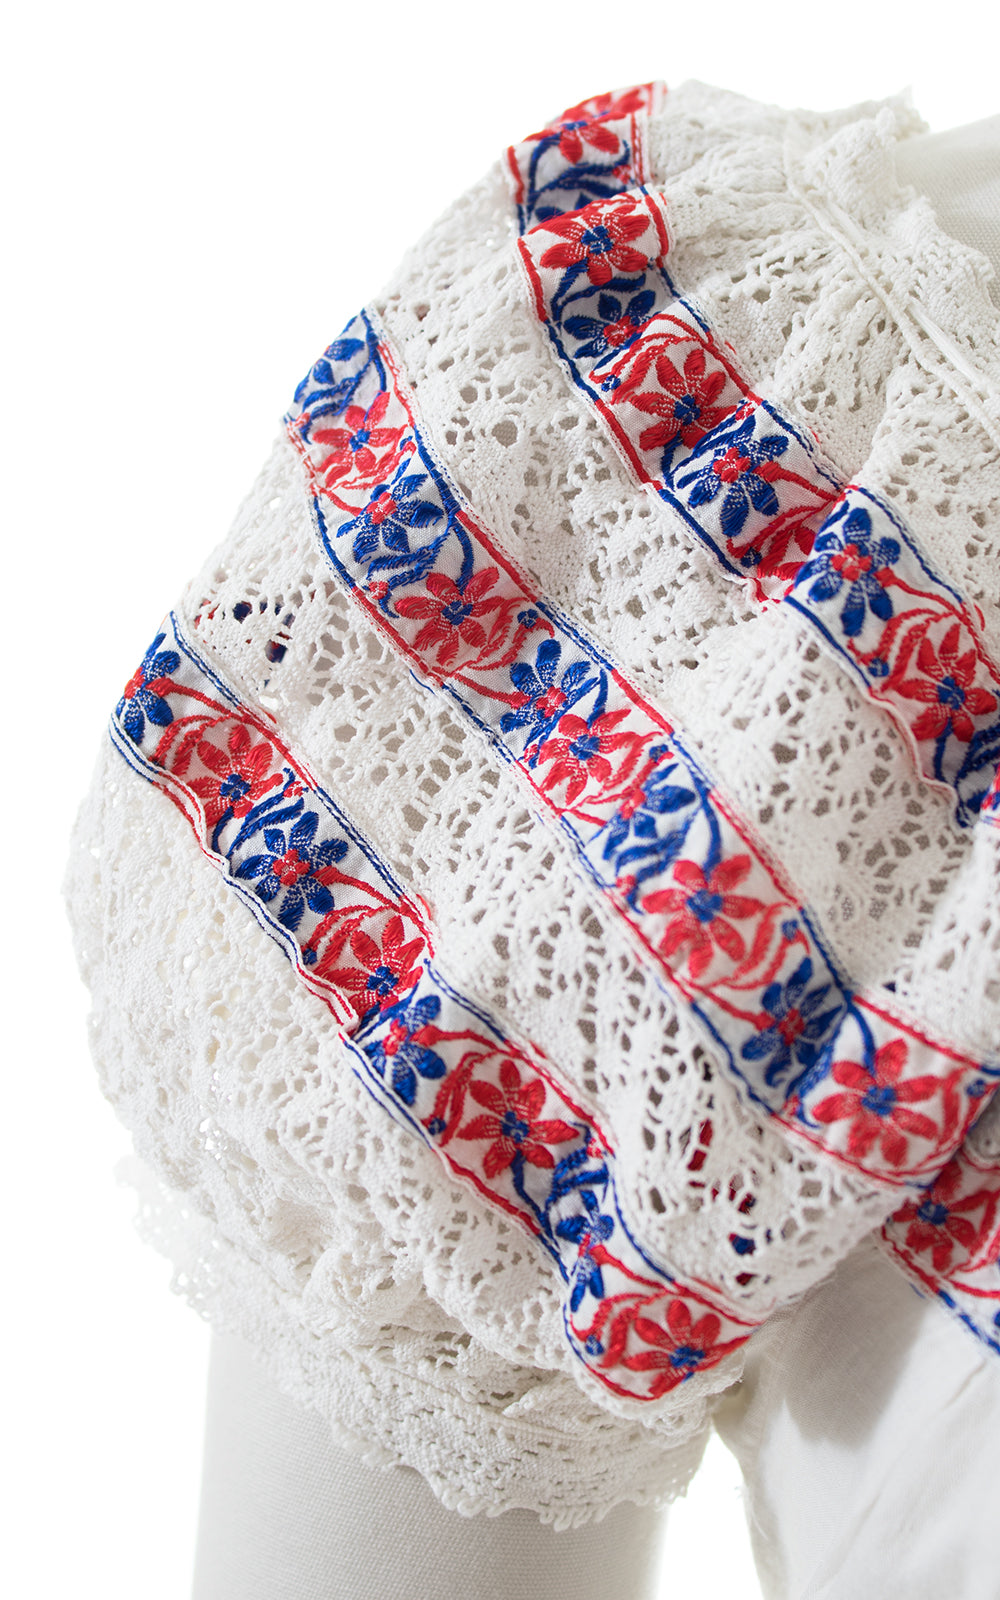 1970s Crochet Puff Sleeve Cotton Peasant Top | medium